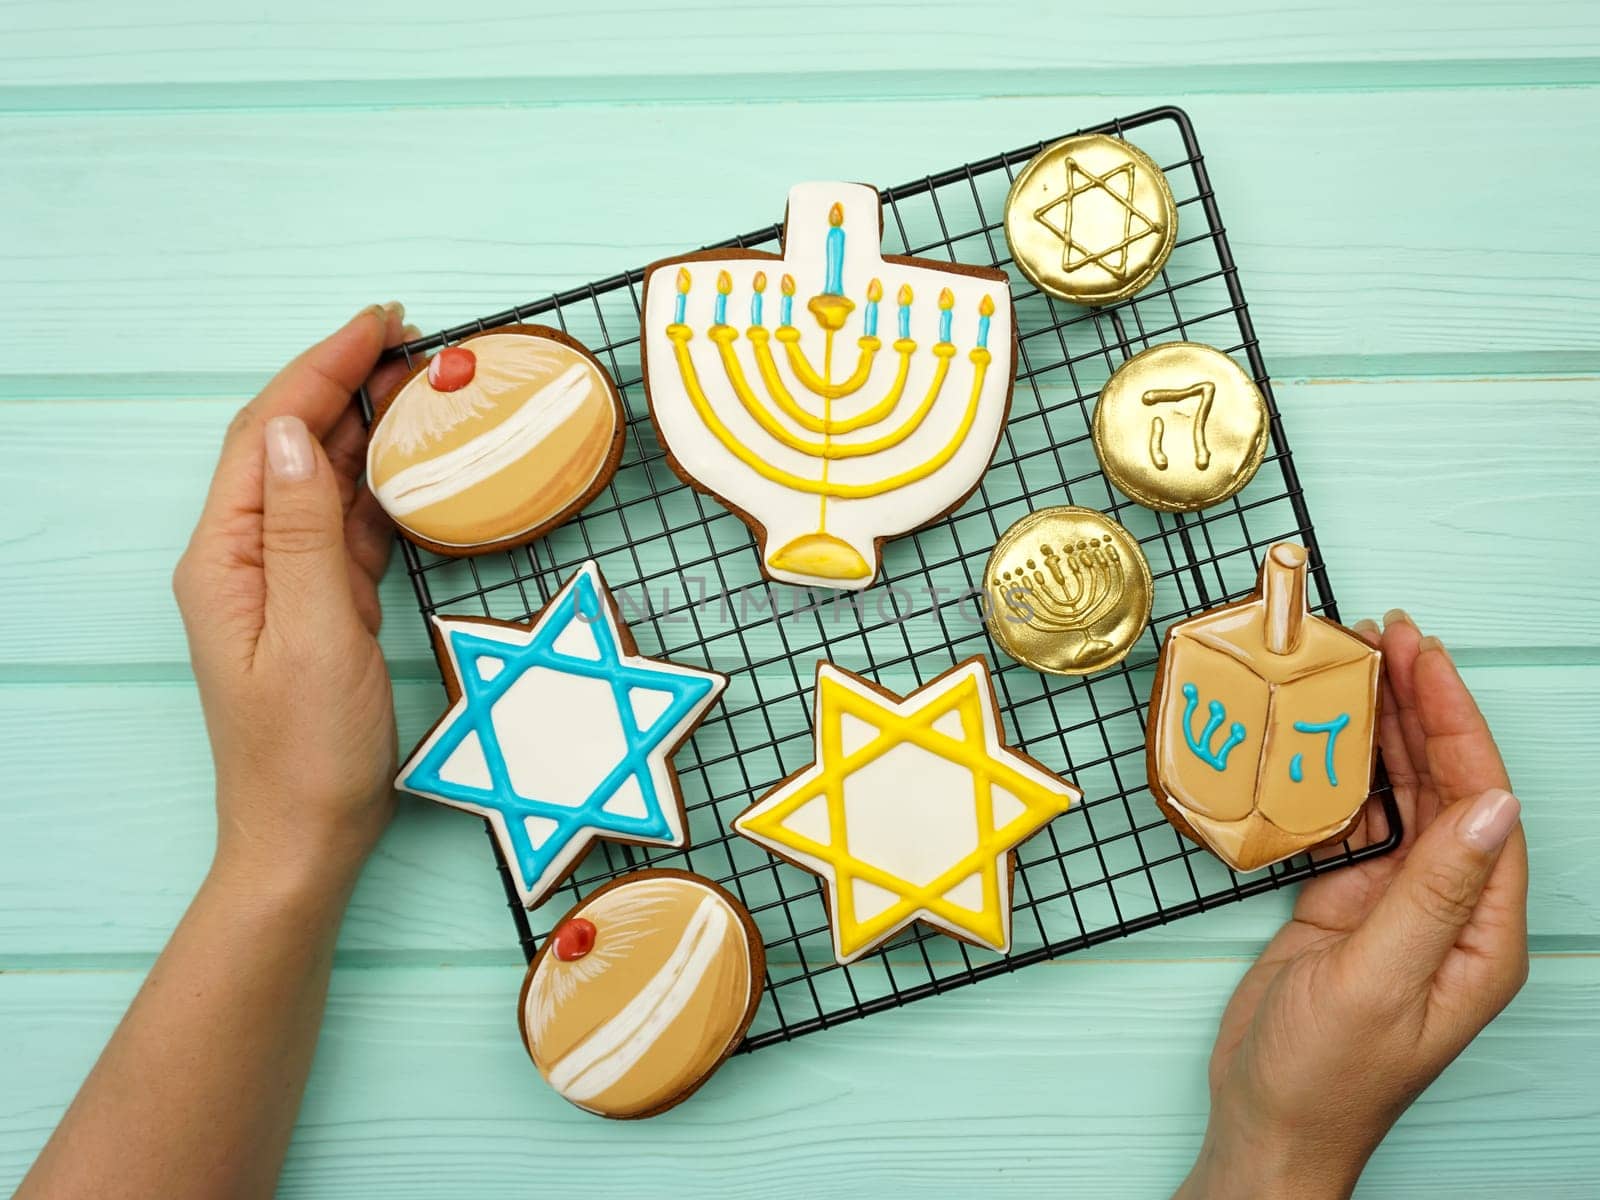 Celebrating Hanukkah. The concept of the Hanukkah holiday. High quality photo